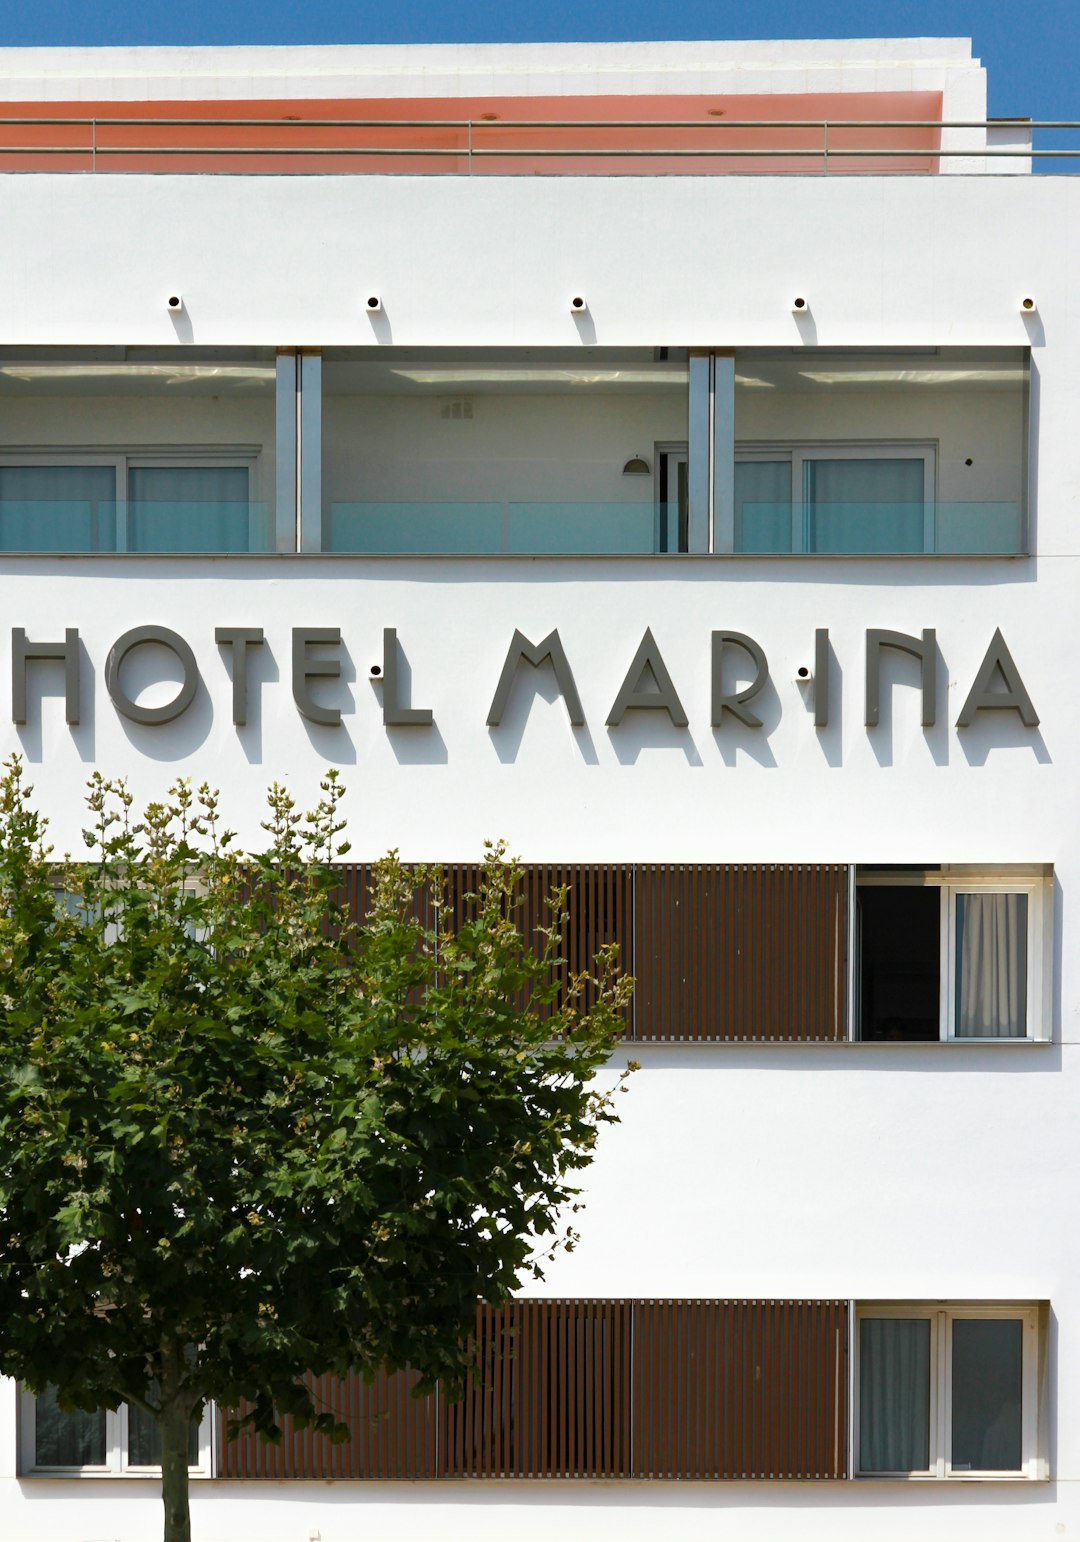 Hotel Marina building